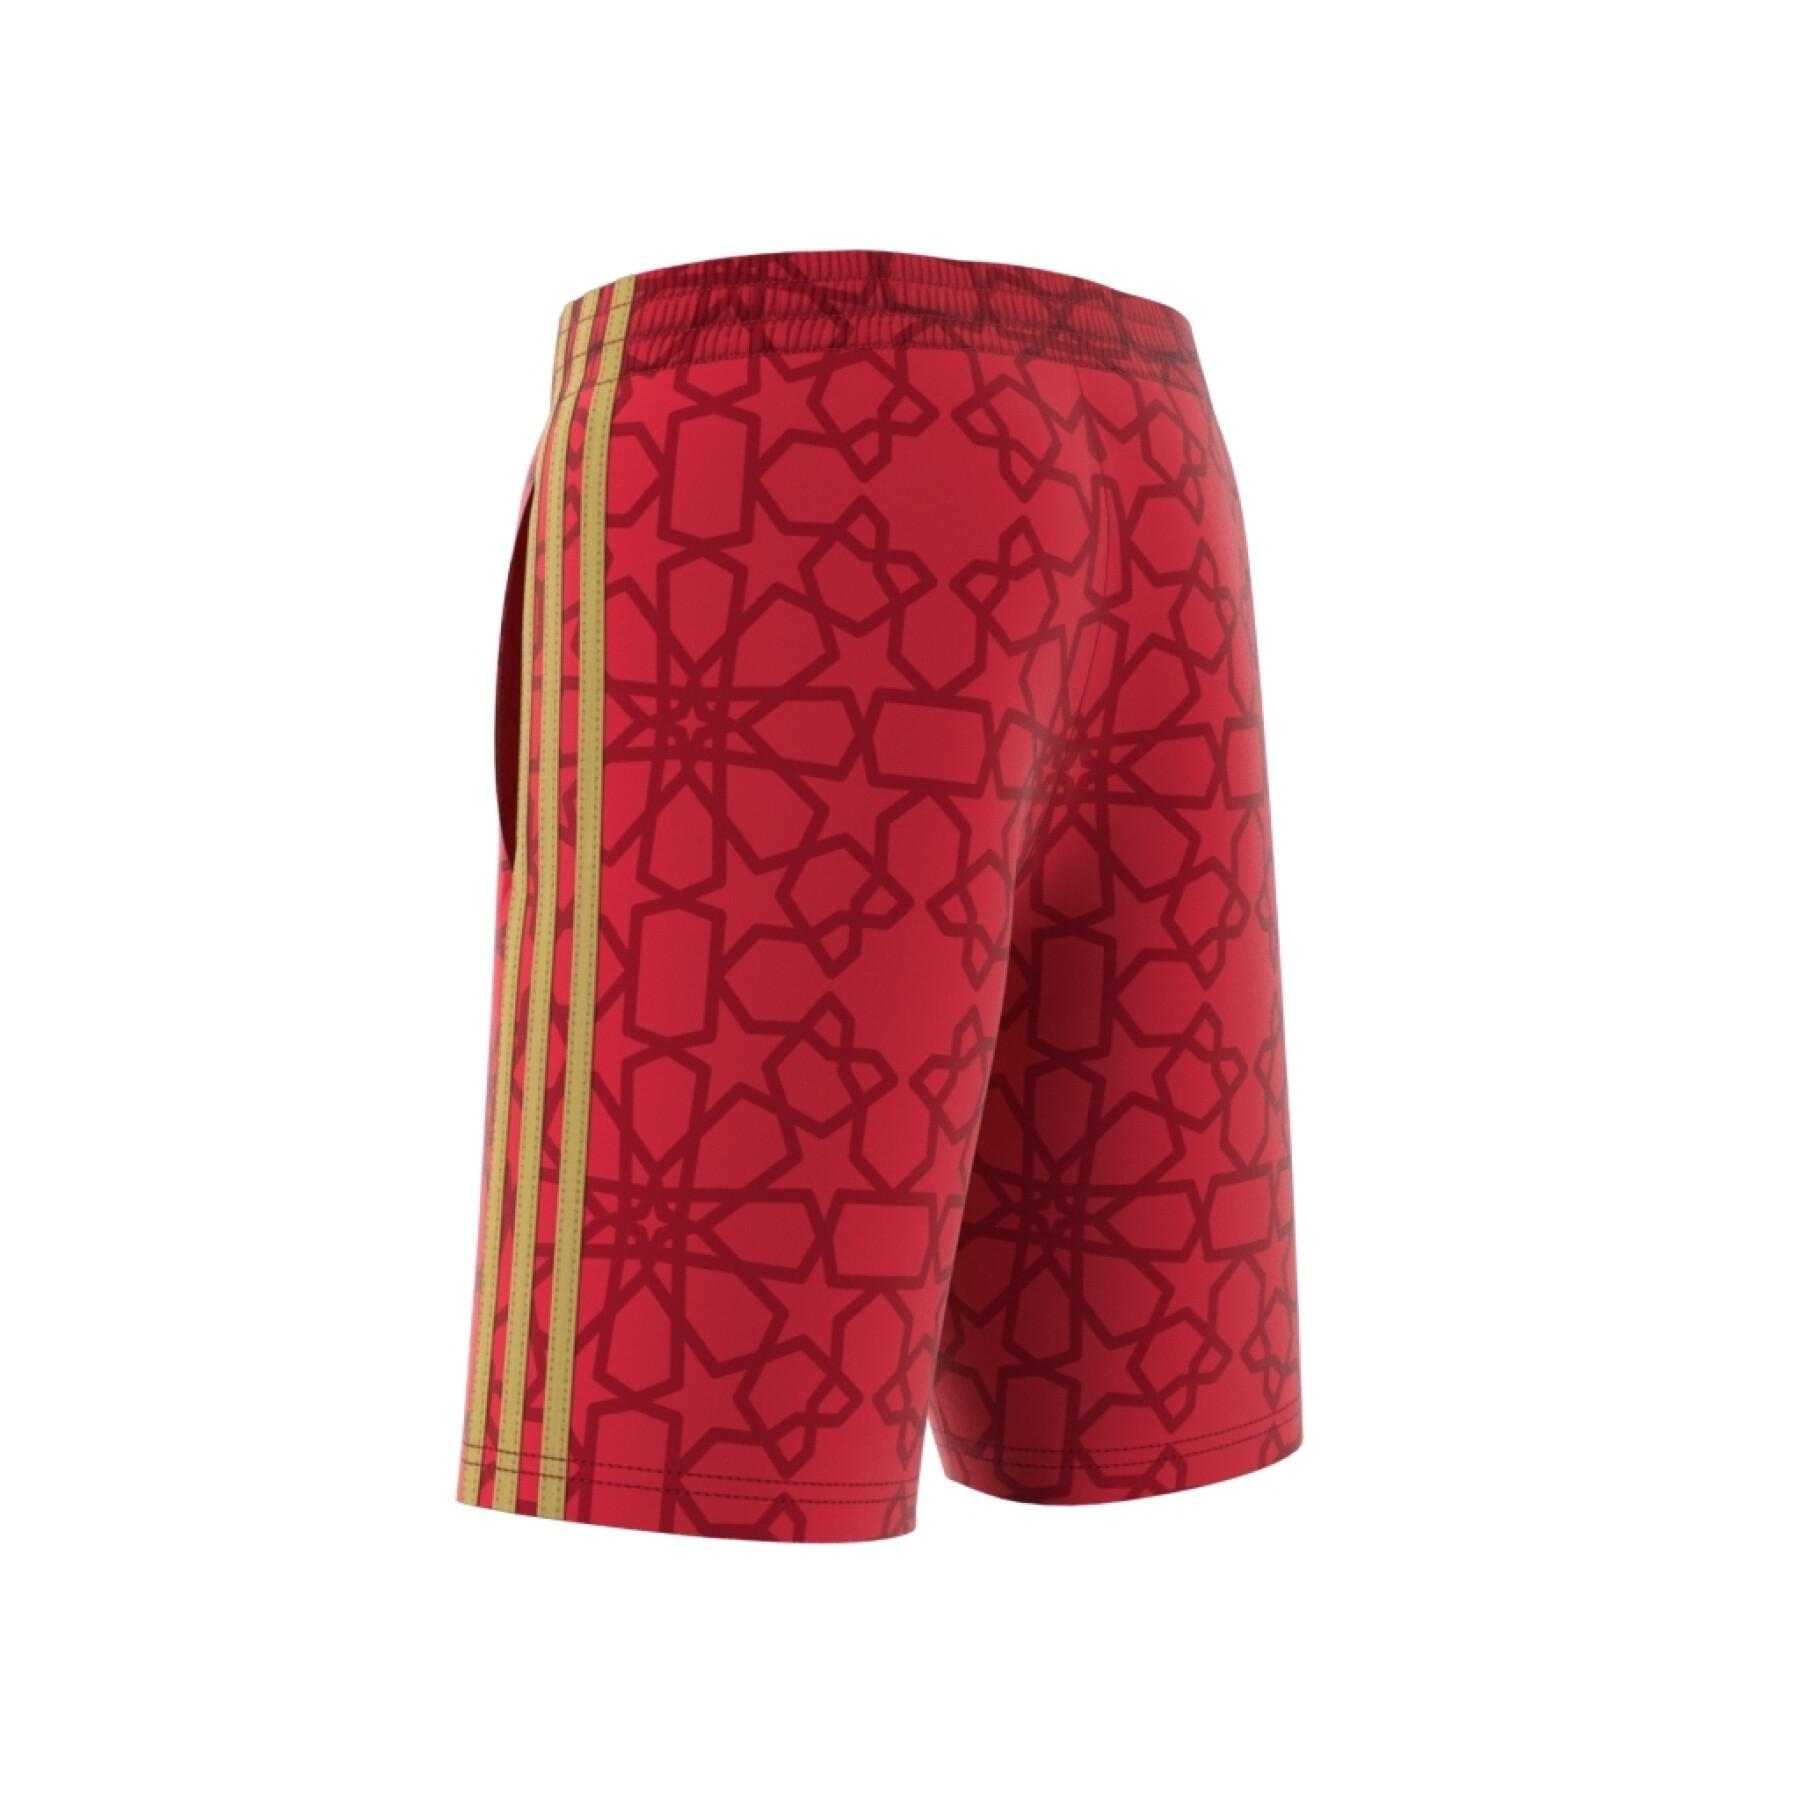 Shorts mit 3 Streifen Kind adidas Mohammed Salah